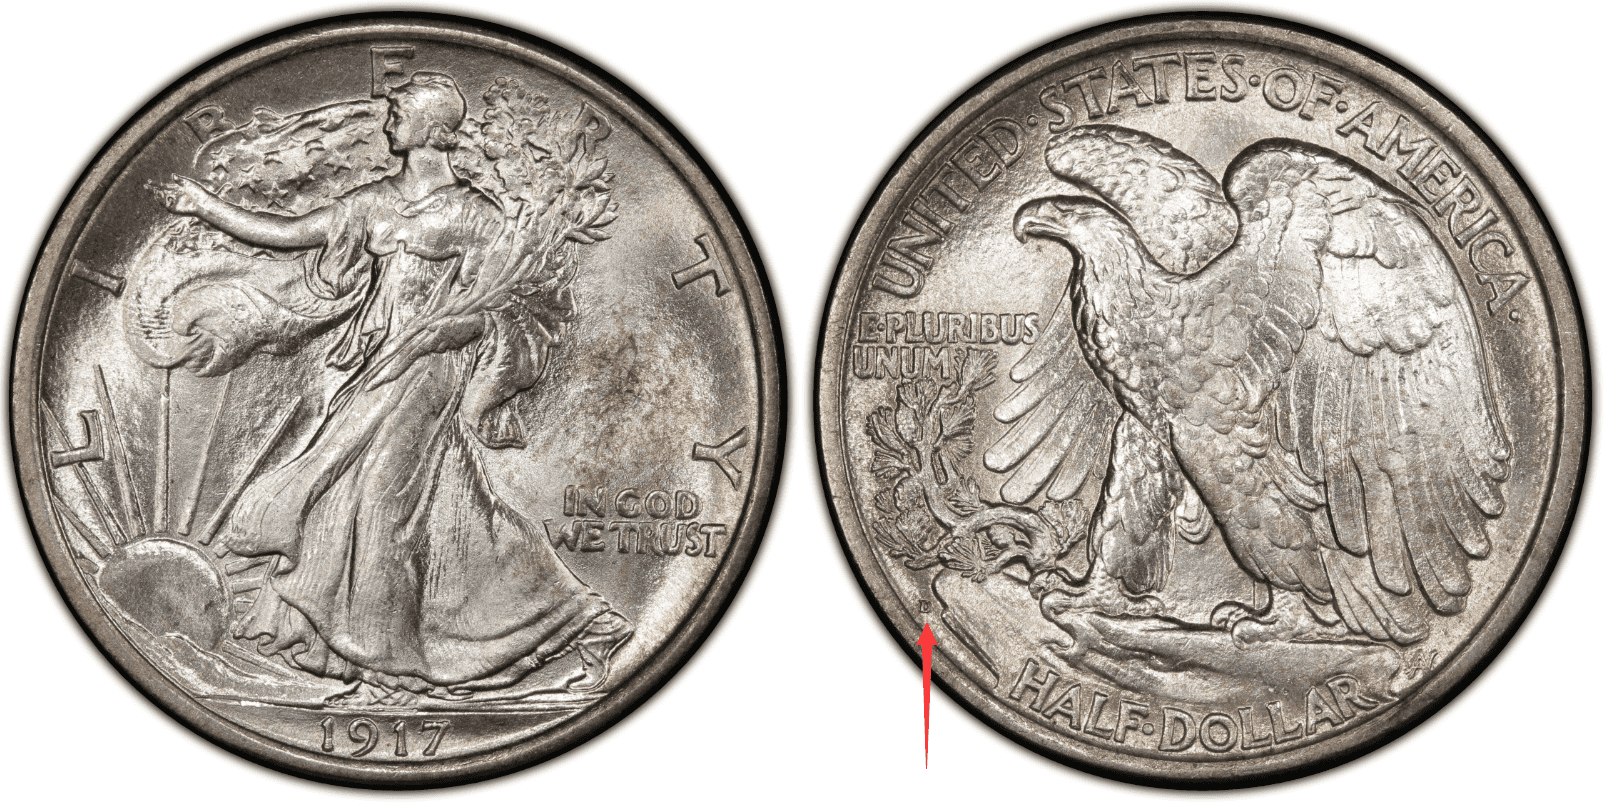 1917 D half-dollar, mint mark on the reverse